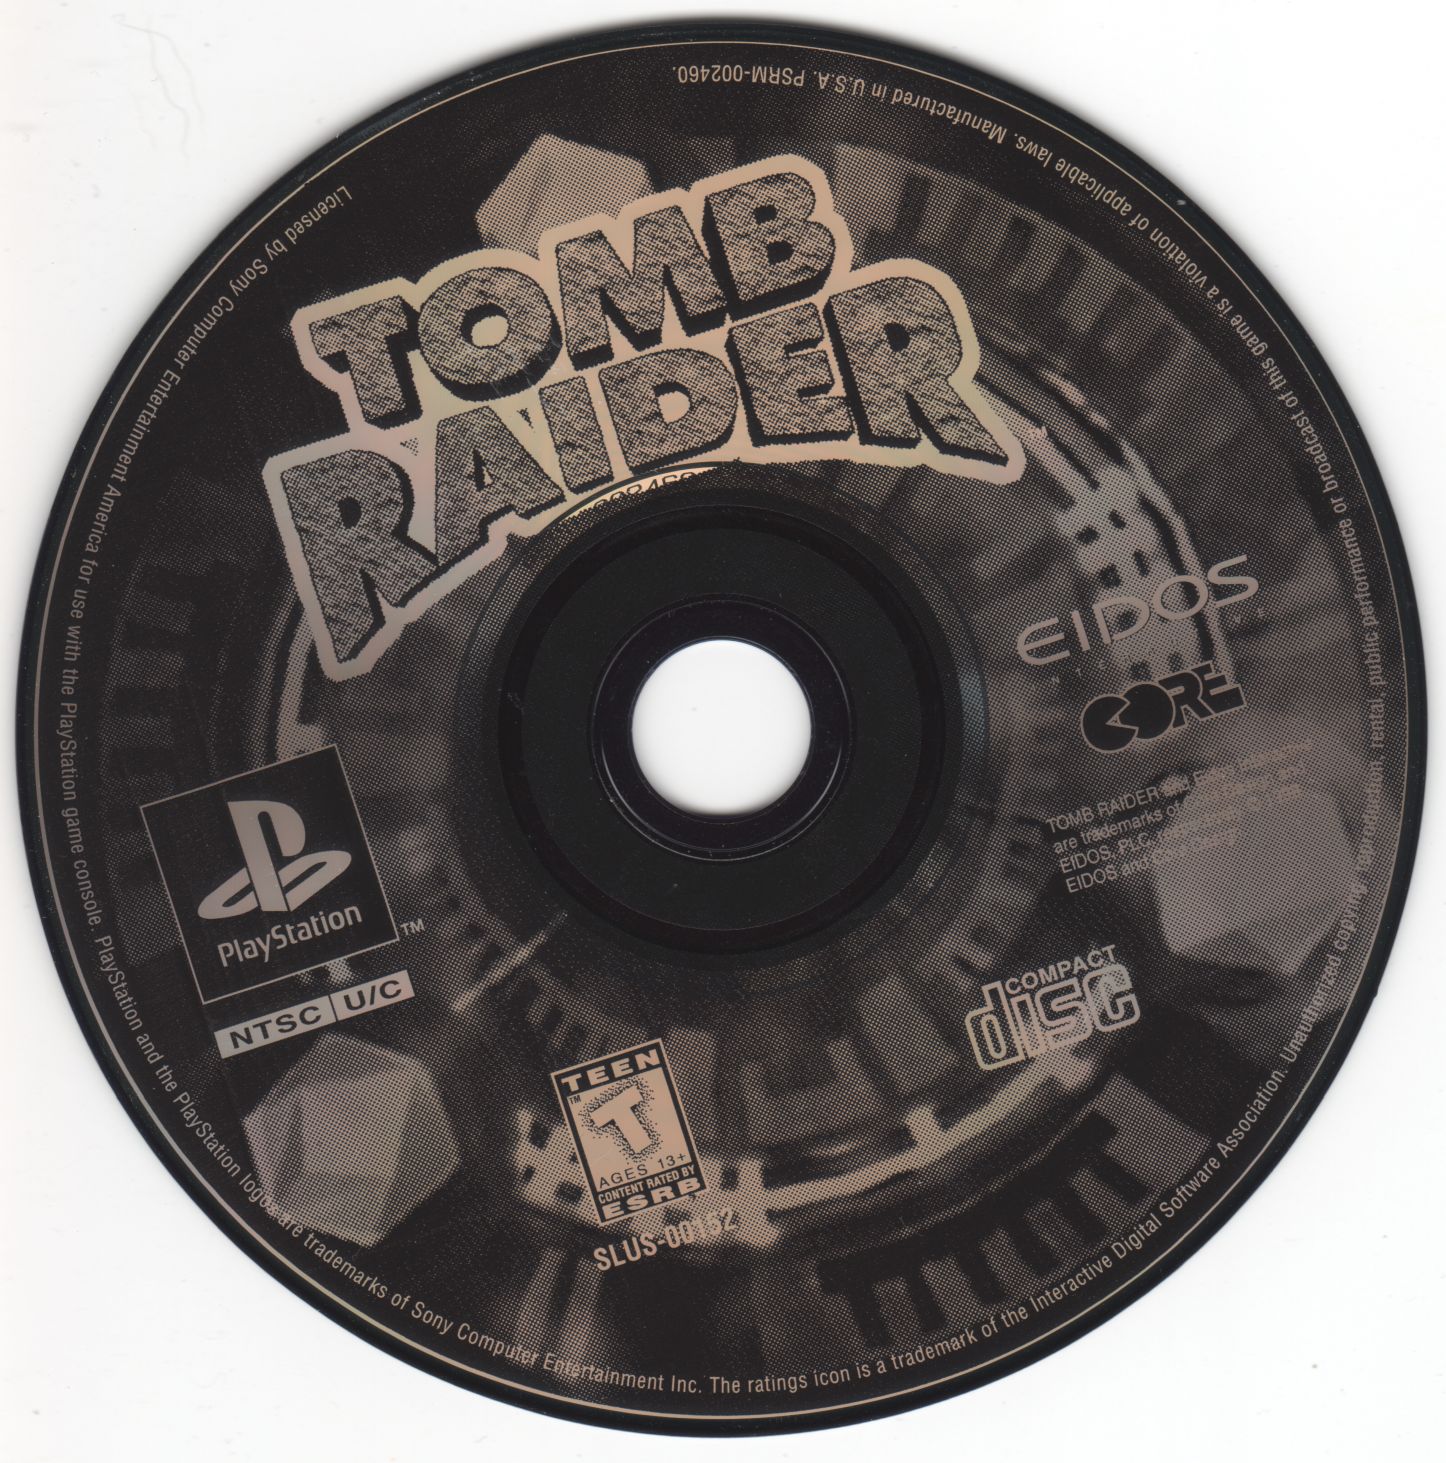 Tomb Raider PSX cover